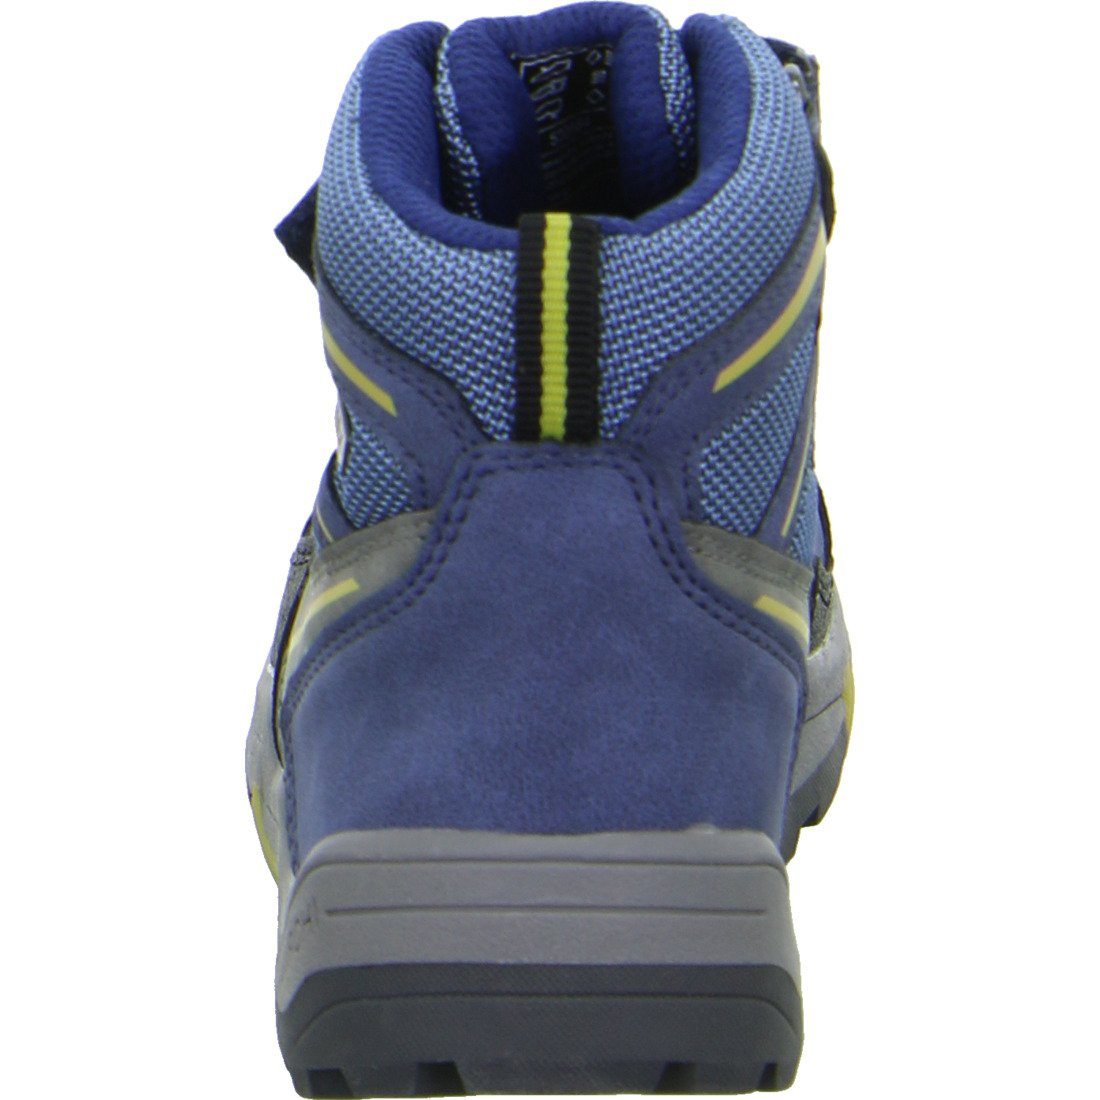 Textil Stiefel - Thilo-Tex Schuhe, 049287 Lurchi Stiefel blau Lurchi